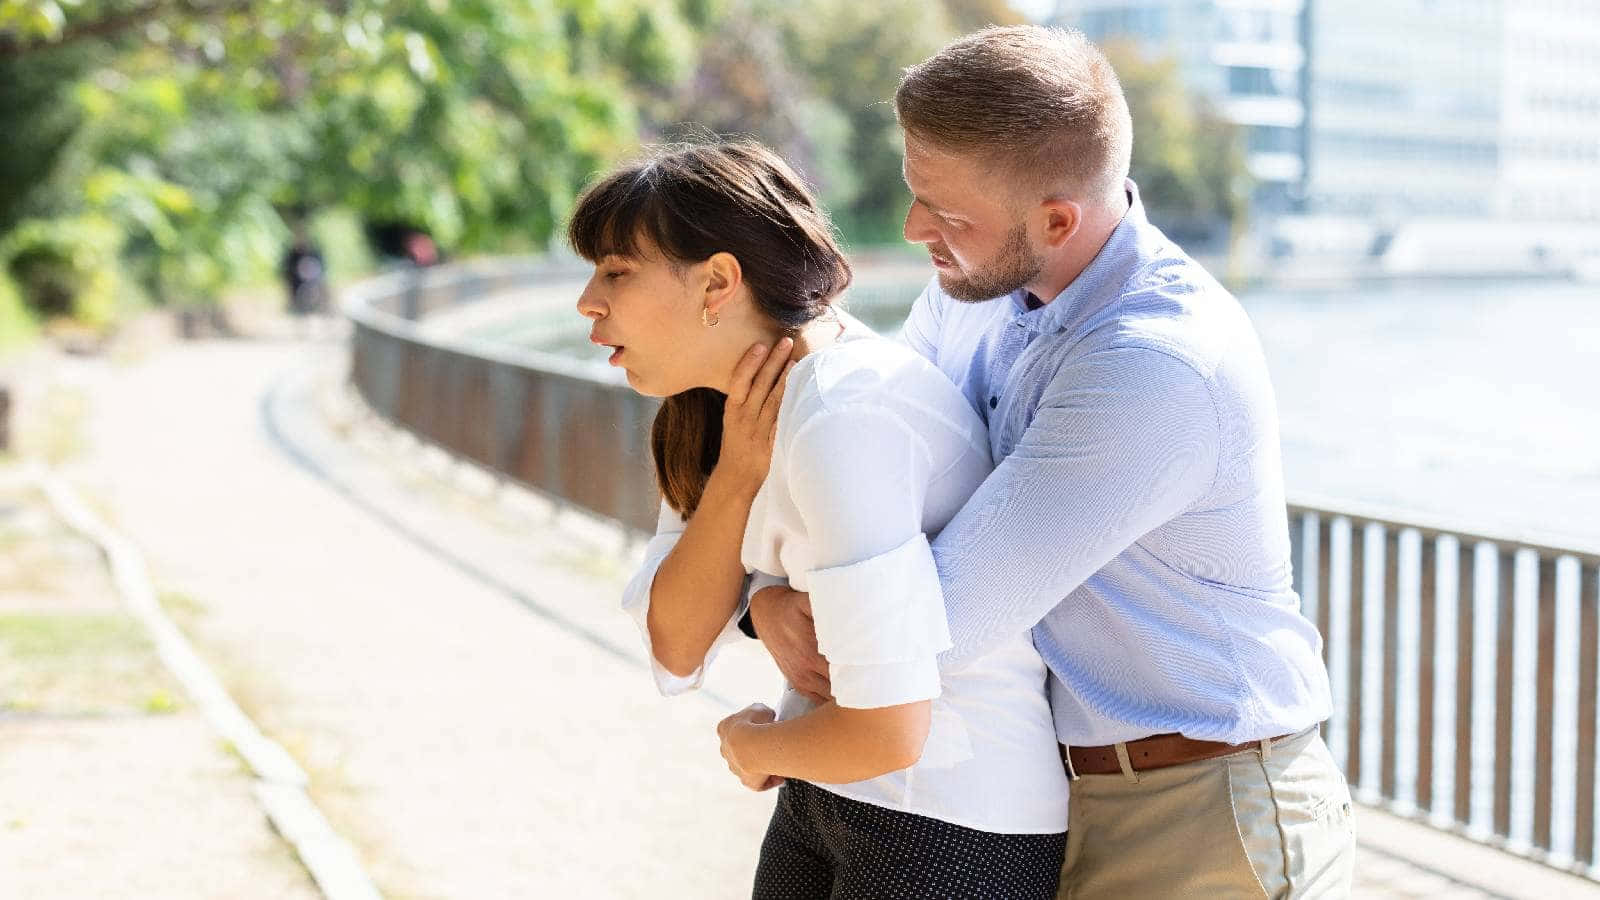 Man Saving A Choking Woman